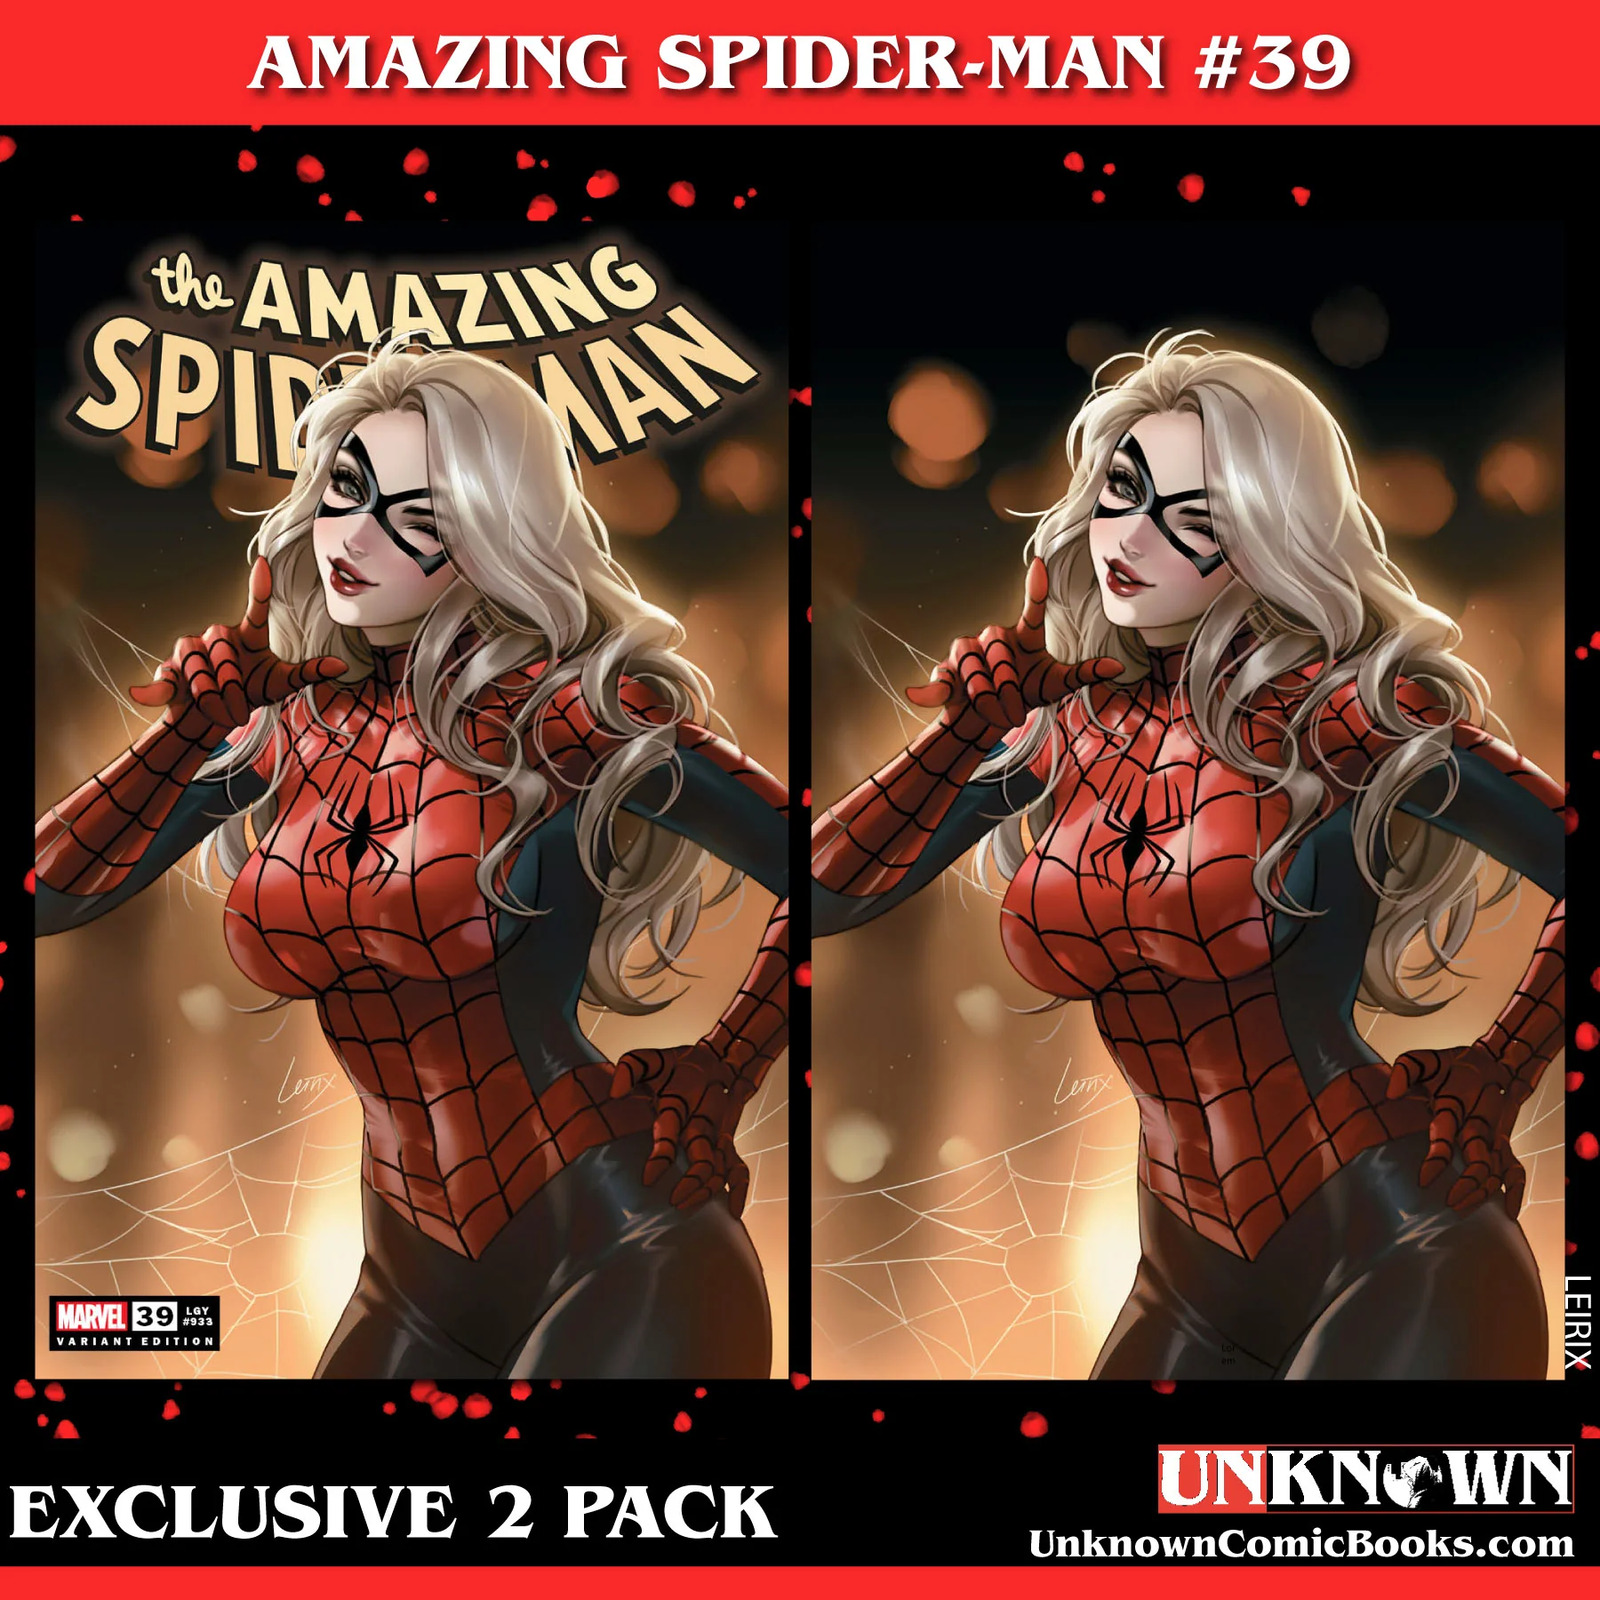 [2 PACK] AMAZING SPIDER-MAN #39 [GW] UNKNOWN COMICS LEIRIX EXCLUSIVE VAR (12/06/